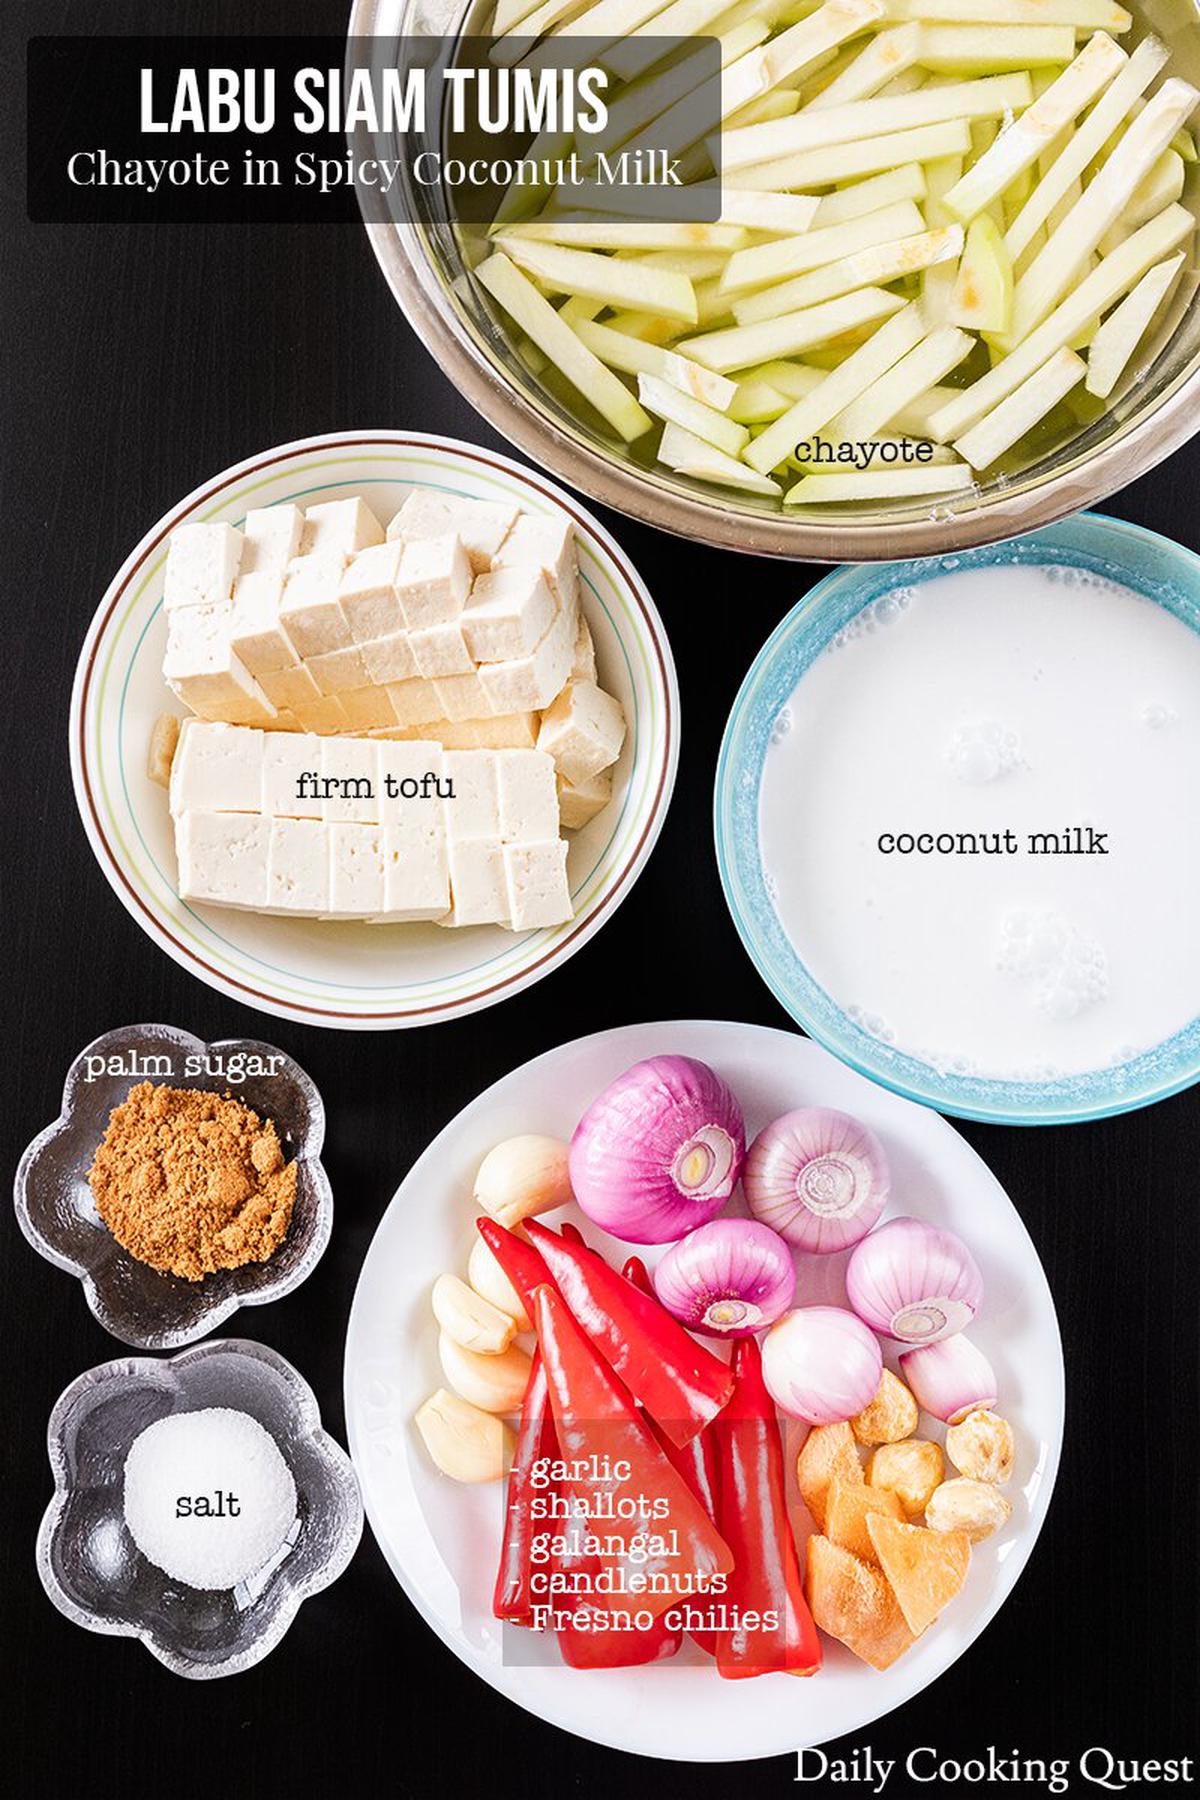 Ingredients to prepare labu siam tumis: chayote, firm tofu, coconut milk, shallots, garlic, galangal, candlenuts, red chilies, palm sugar, and salt.